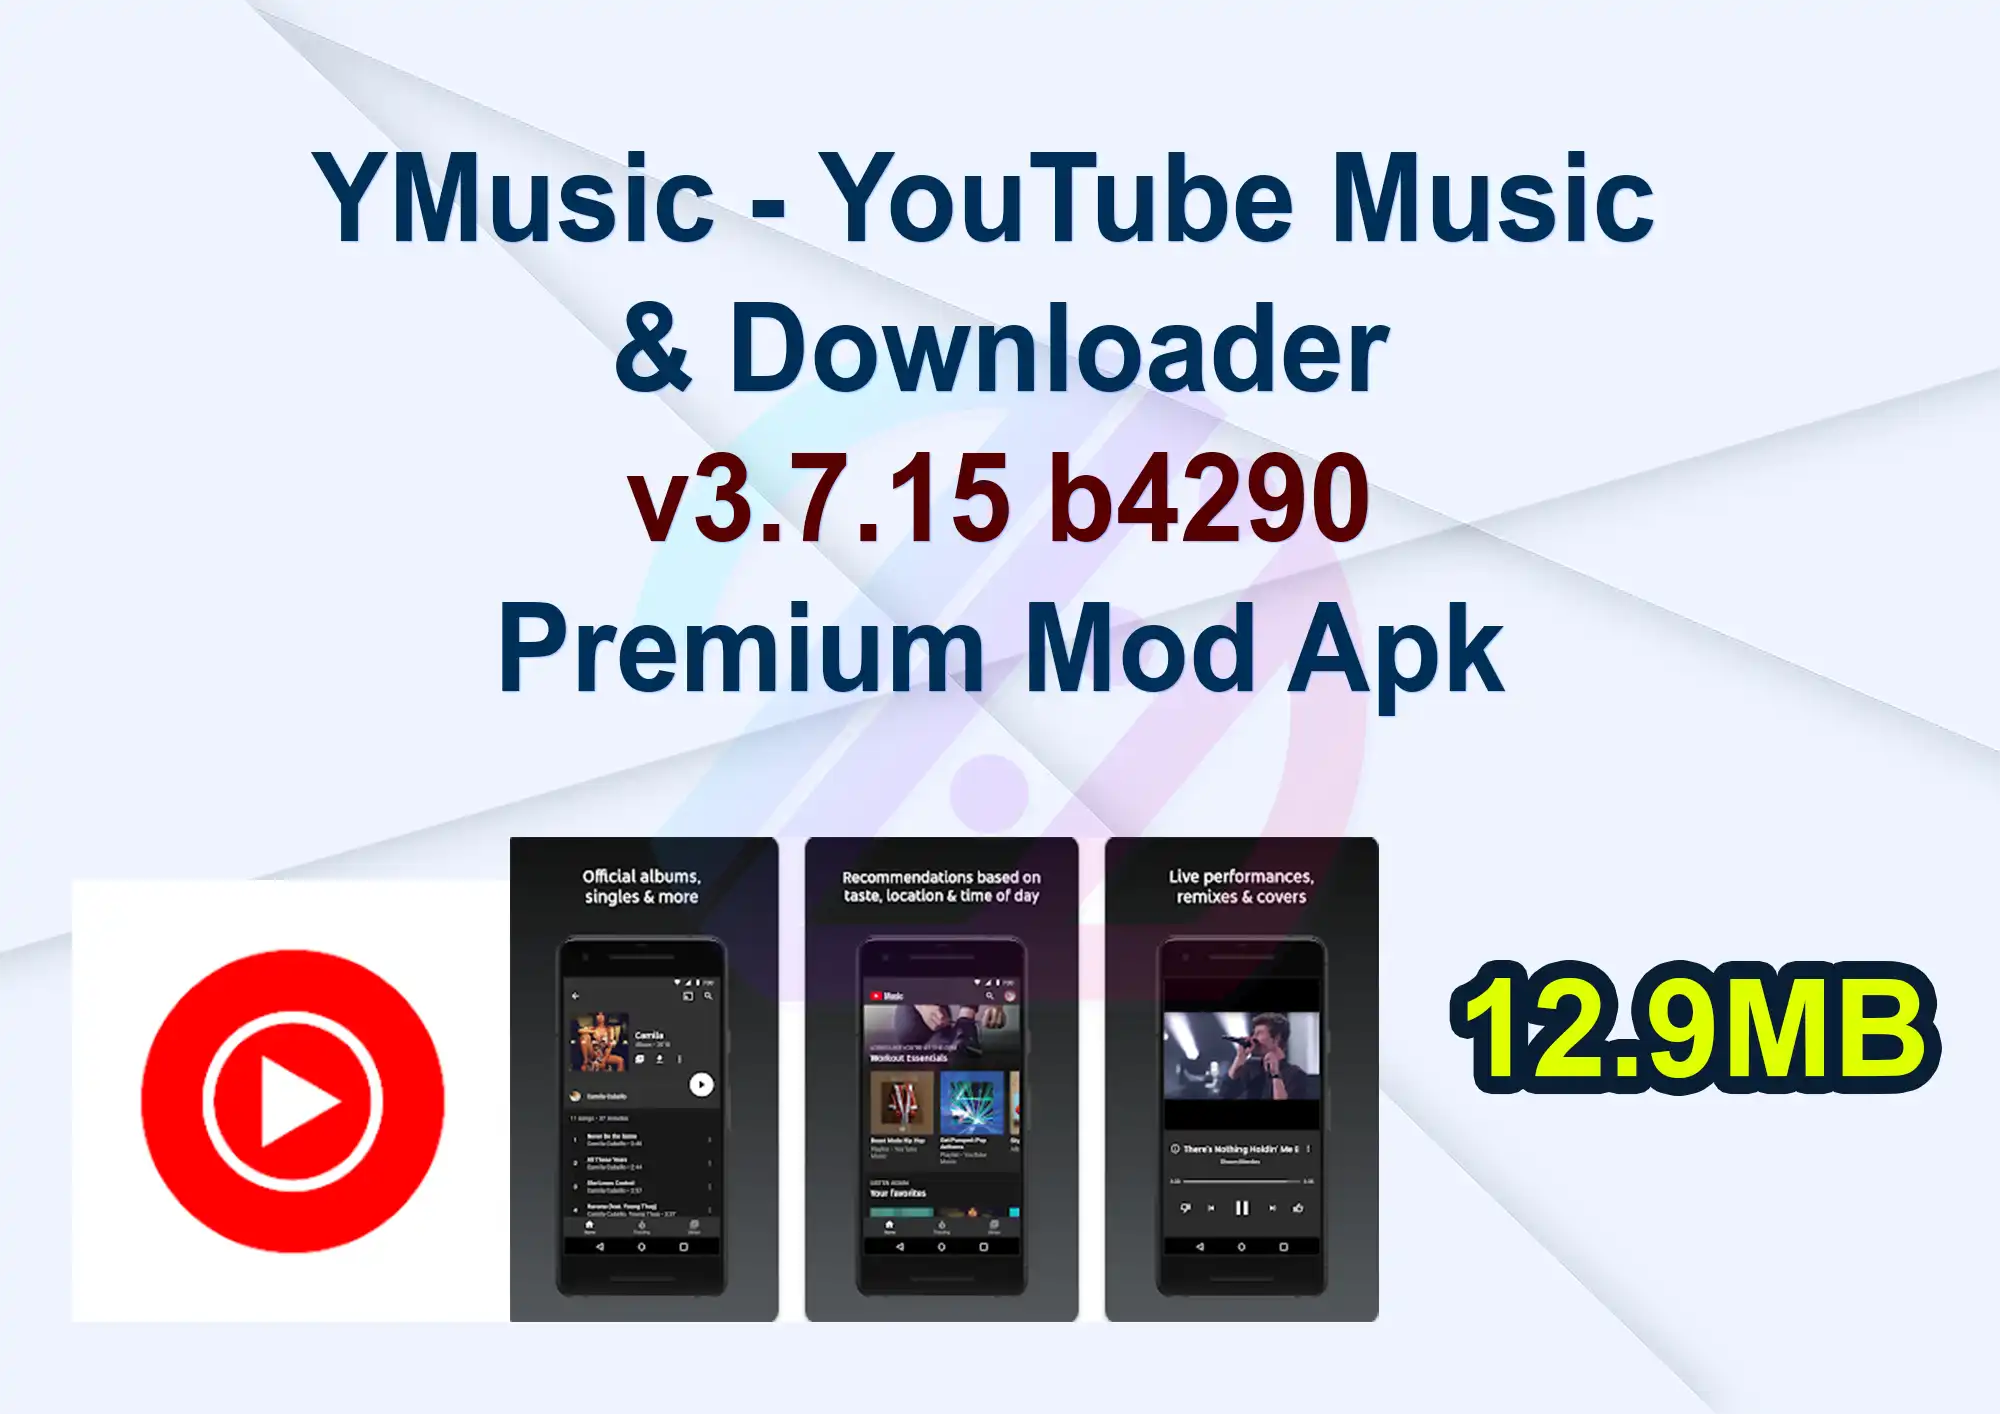 YMusic - YouTube Music & Downloader v3.7.15 b4290 Premium Mod Apk